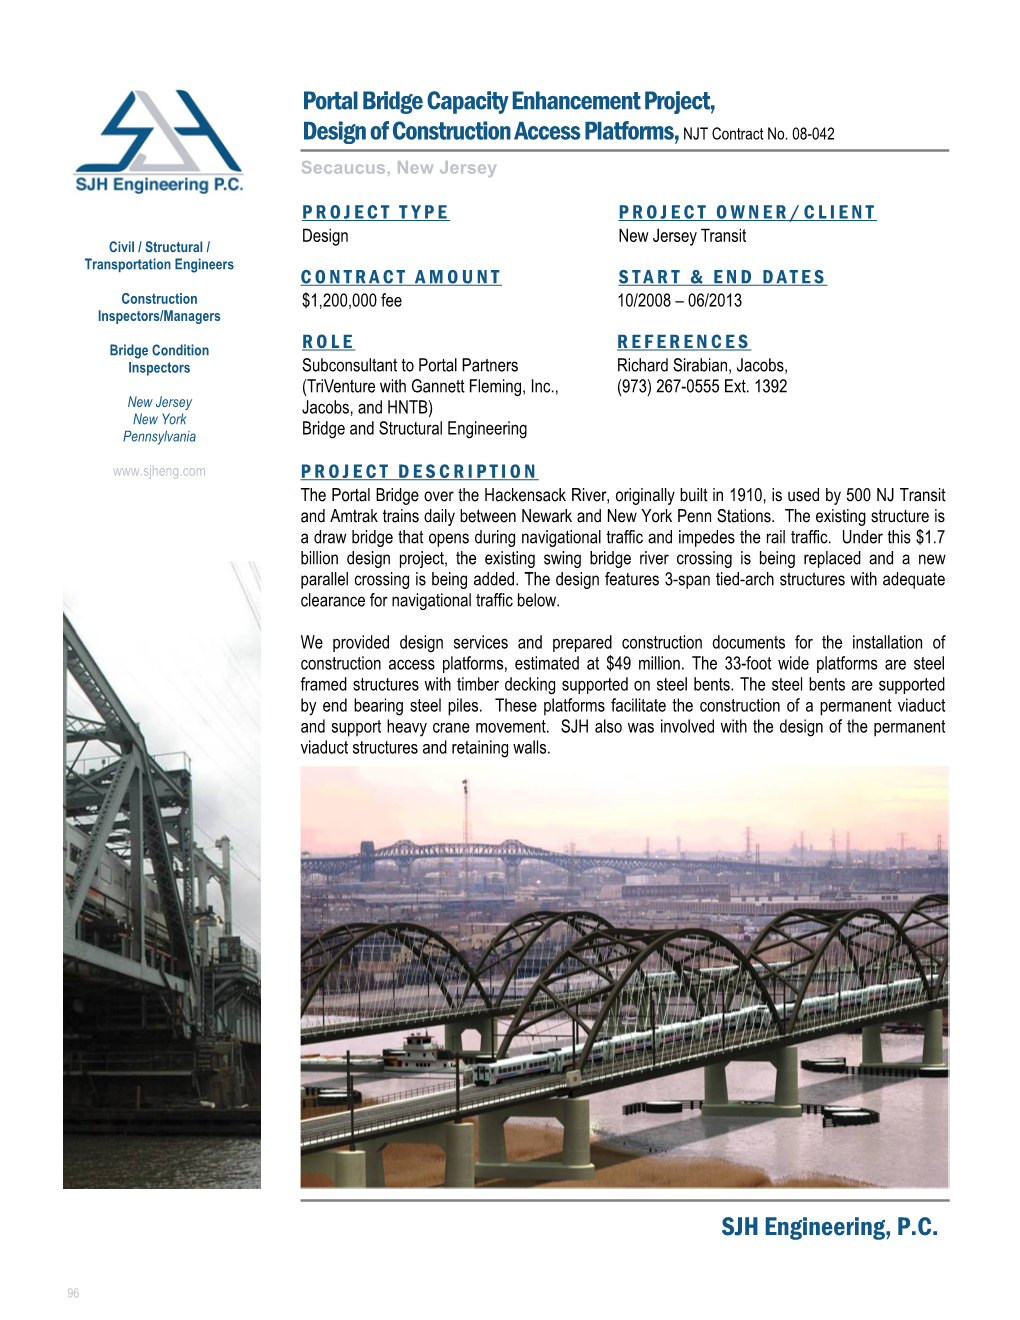 Portal Bridge Capacity Enhancement Project, Design of Construction